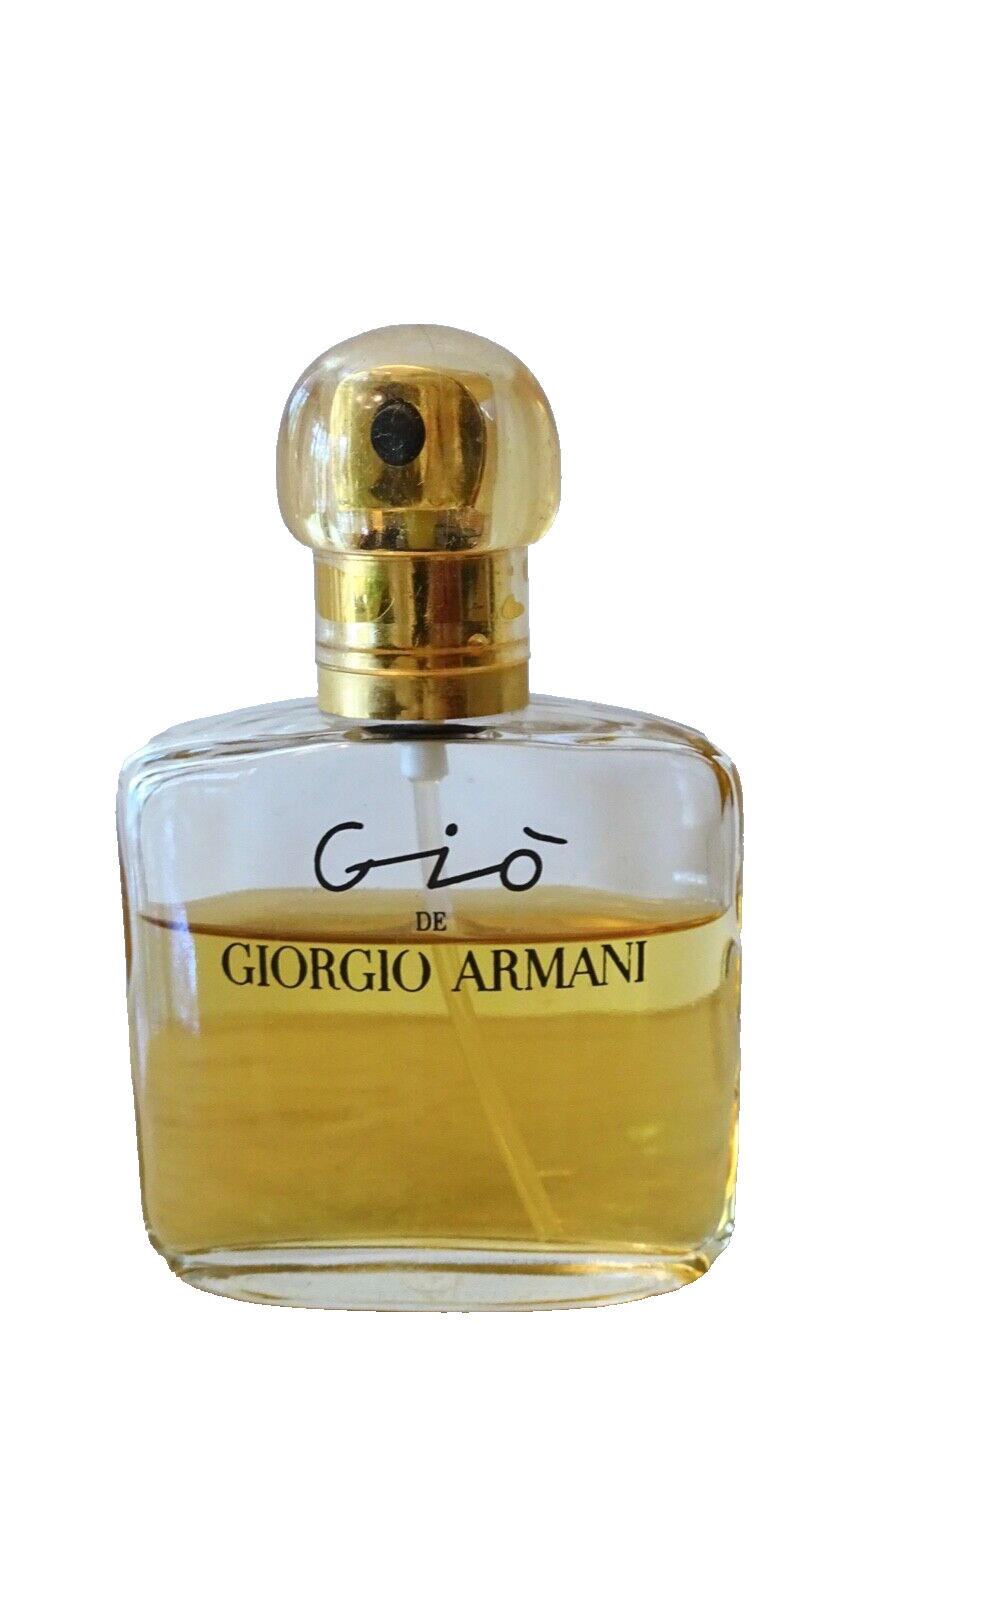 Gio de Giorgio Armani Eau de Parfum Spray  1.7 fl oz  USED  SEE PICTURES